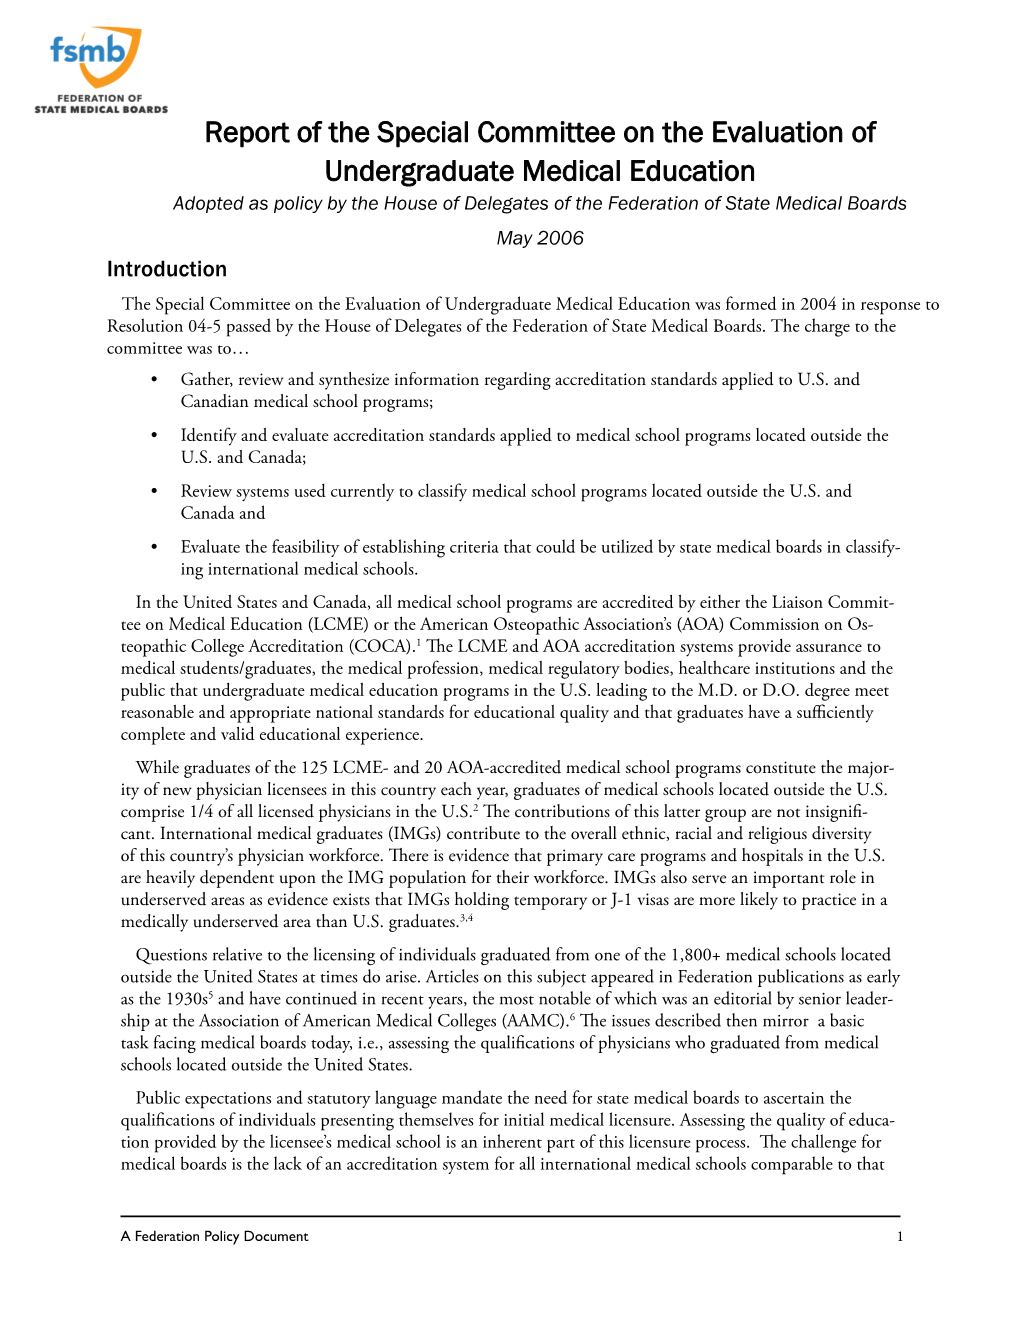 Evaluation of Undergraduate Medical Education